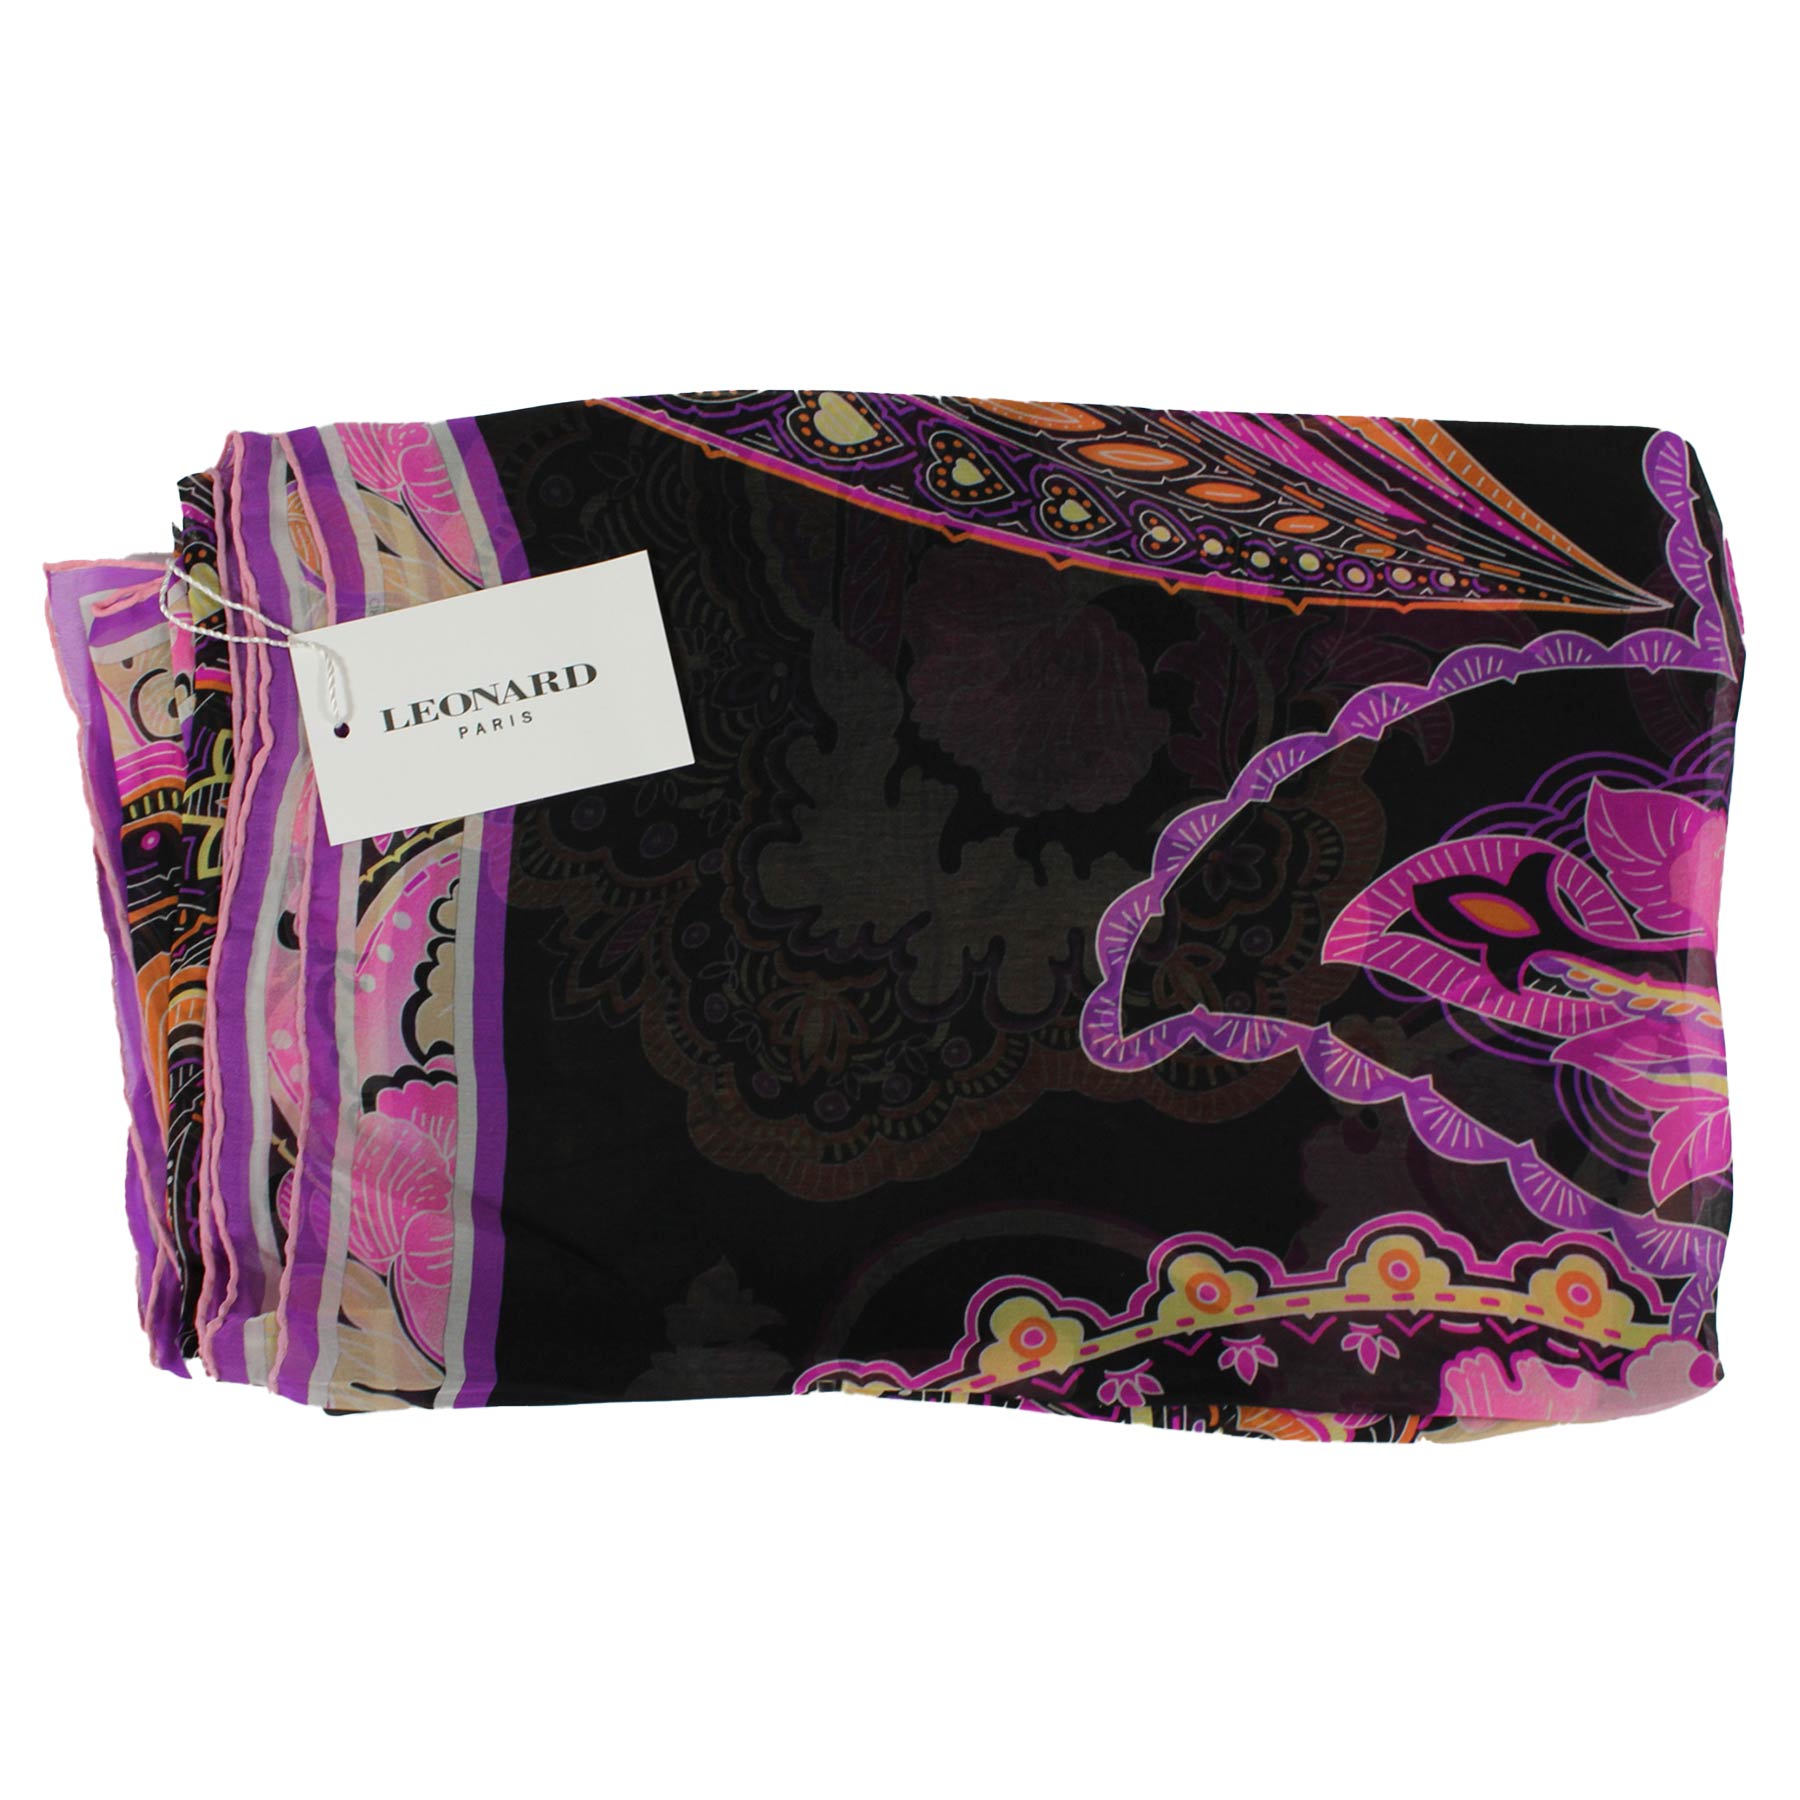 Leonard Paris Scarf Black Pink Purple Floral - Large Square Chiffon Silk Wrap